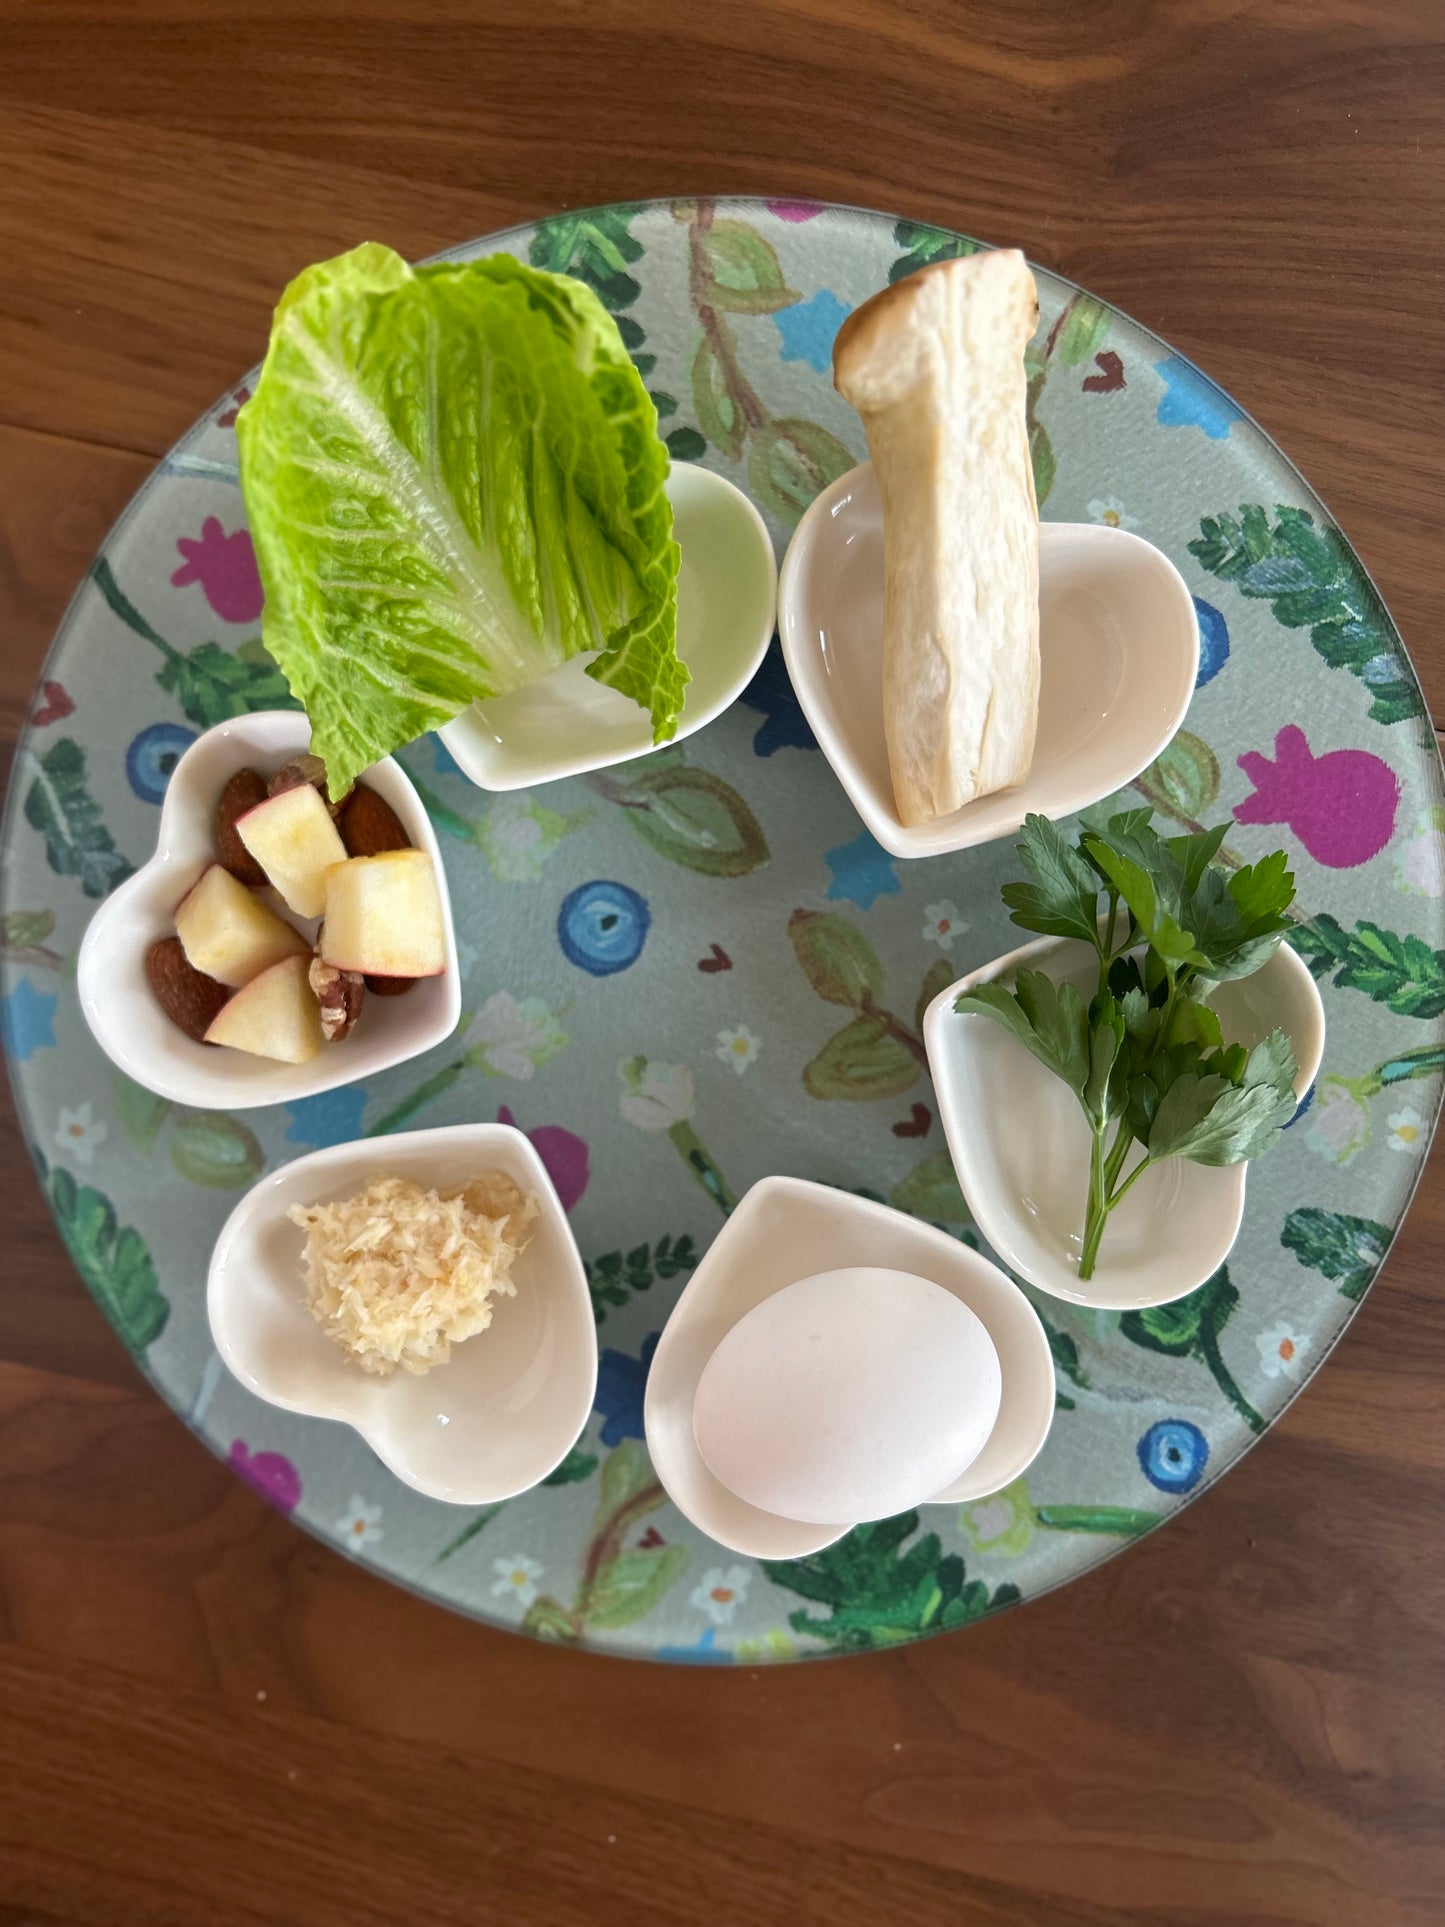 My Secret Garden Seder Plate